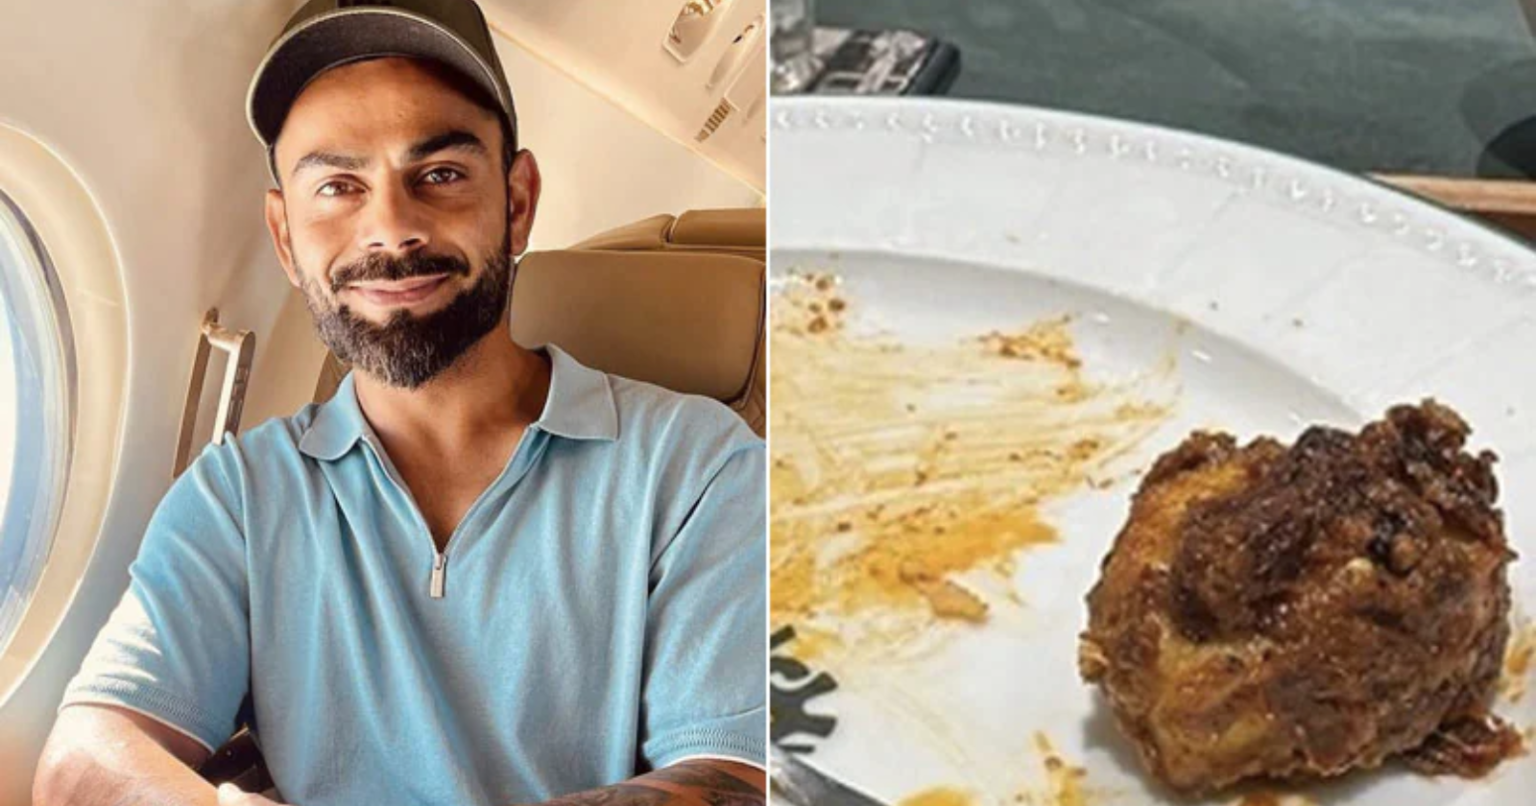 Virat Kohli’s “Chicken Tikka” Post Stuns Social Media As He Is A Vegetarian. But, There’s A Catch